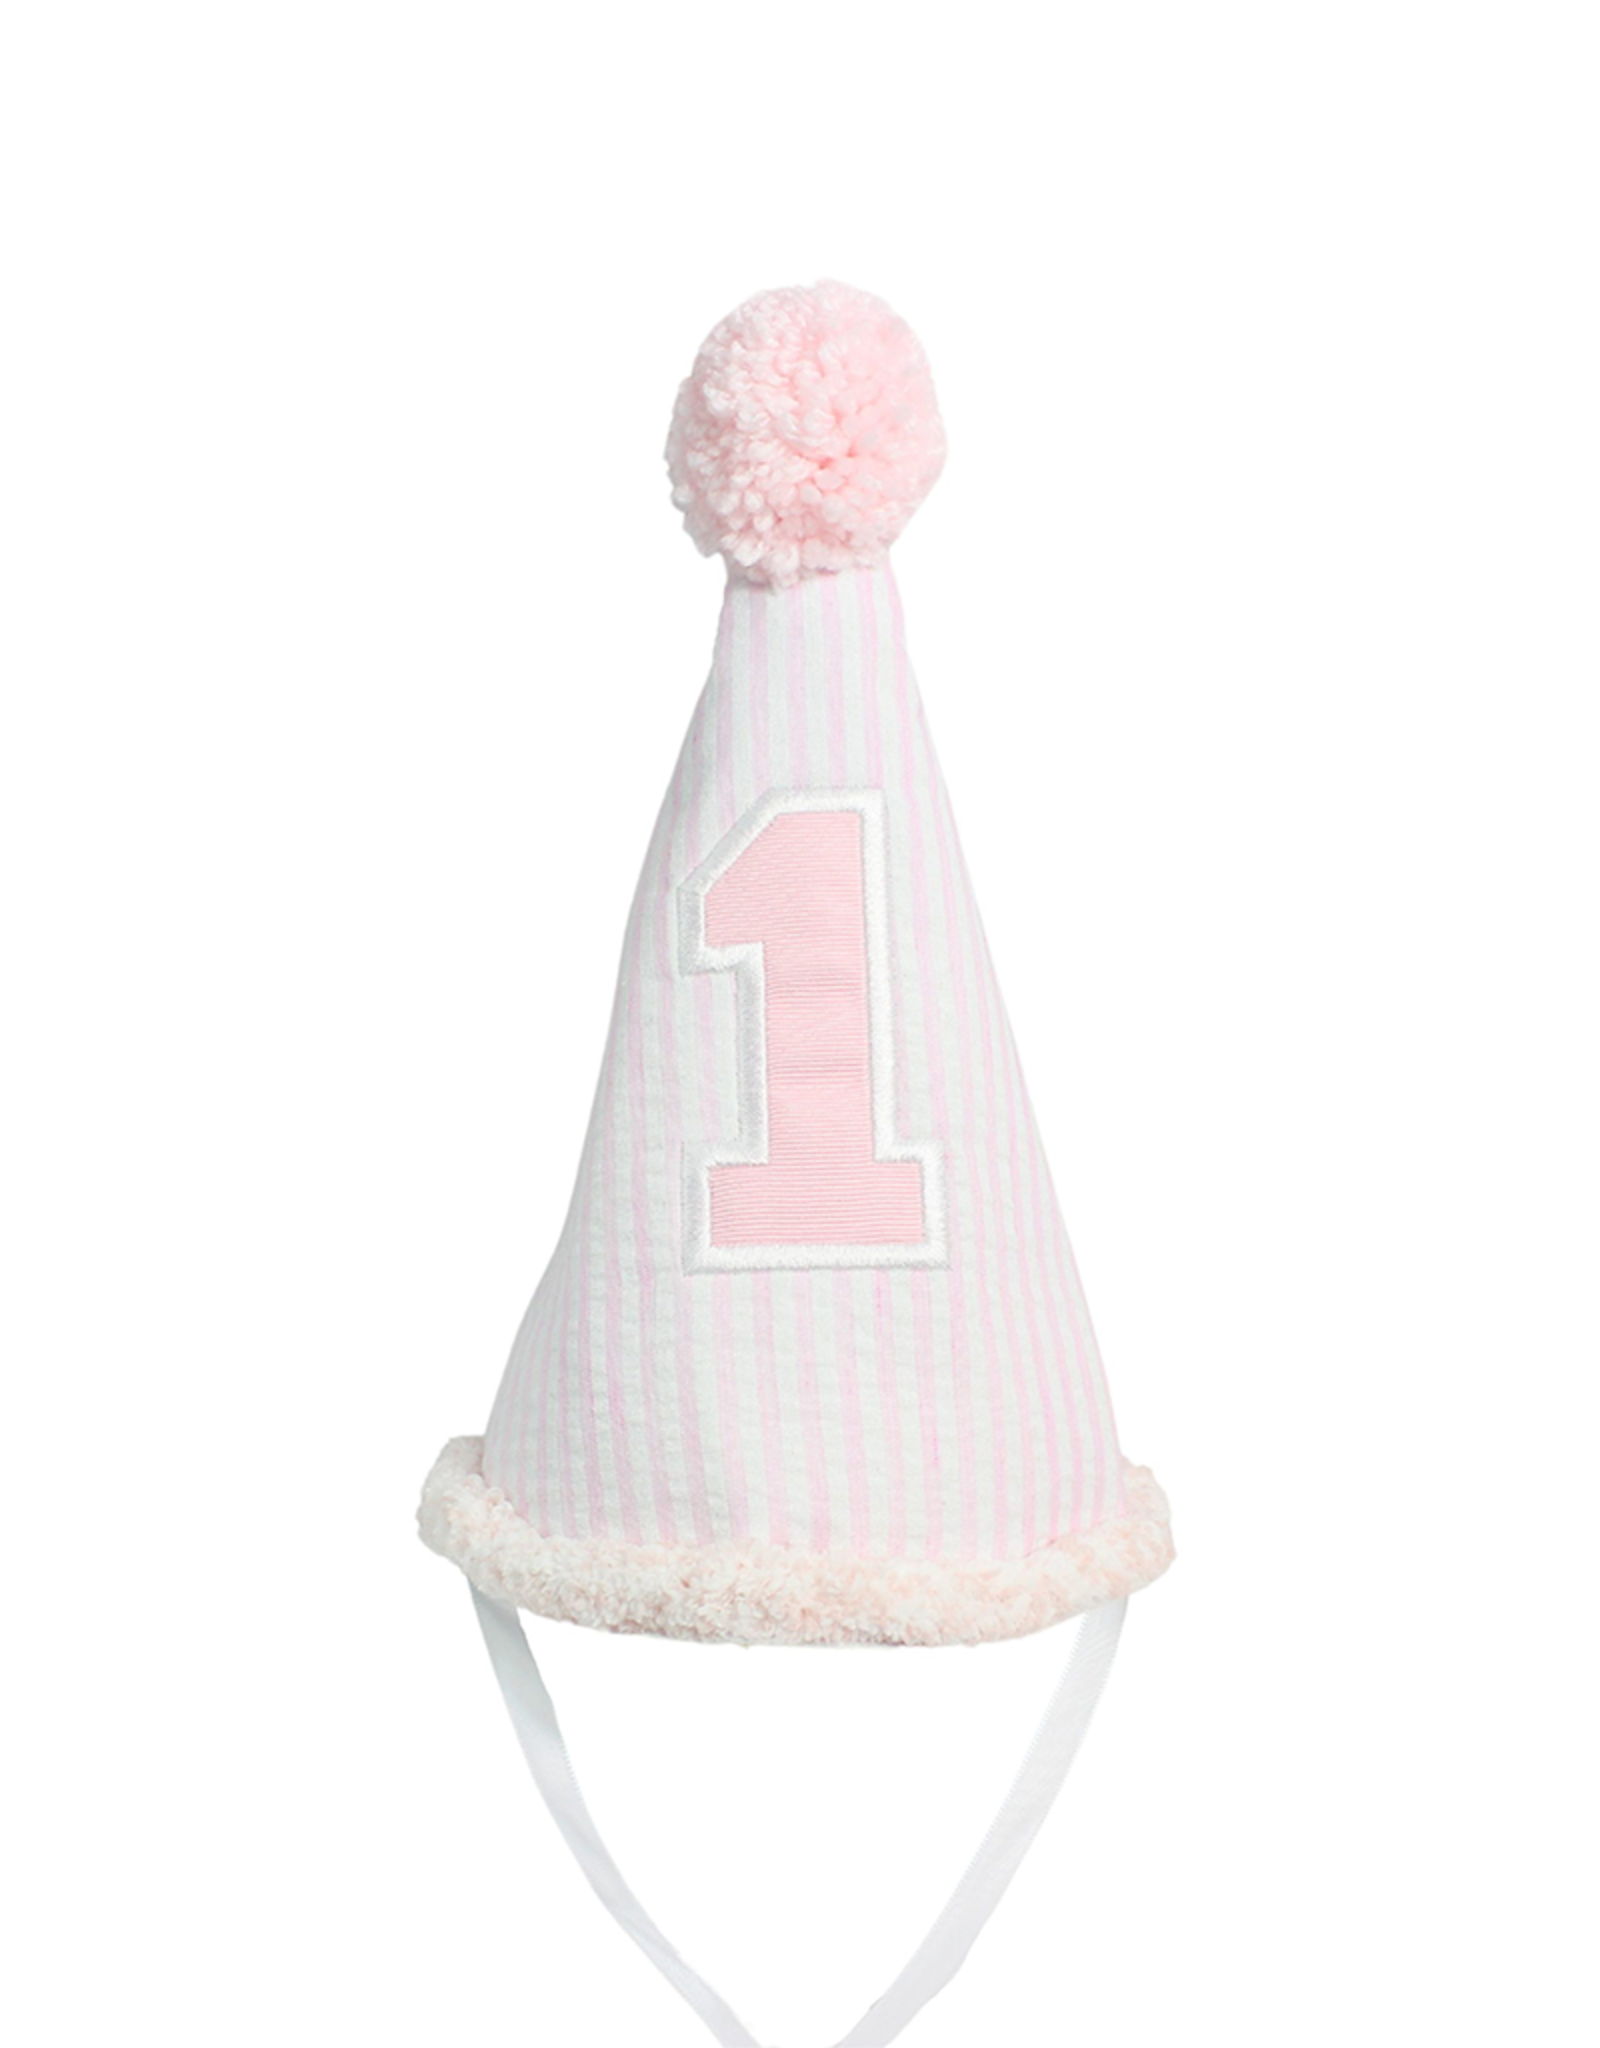 Beyond Creations Birthday Hat pink seersucker